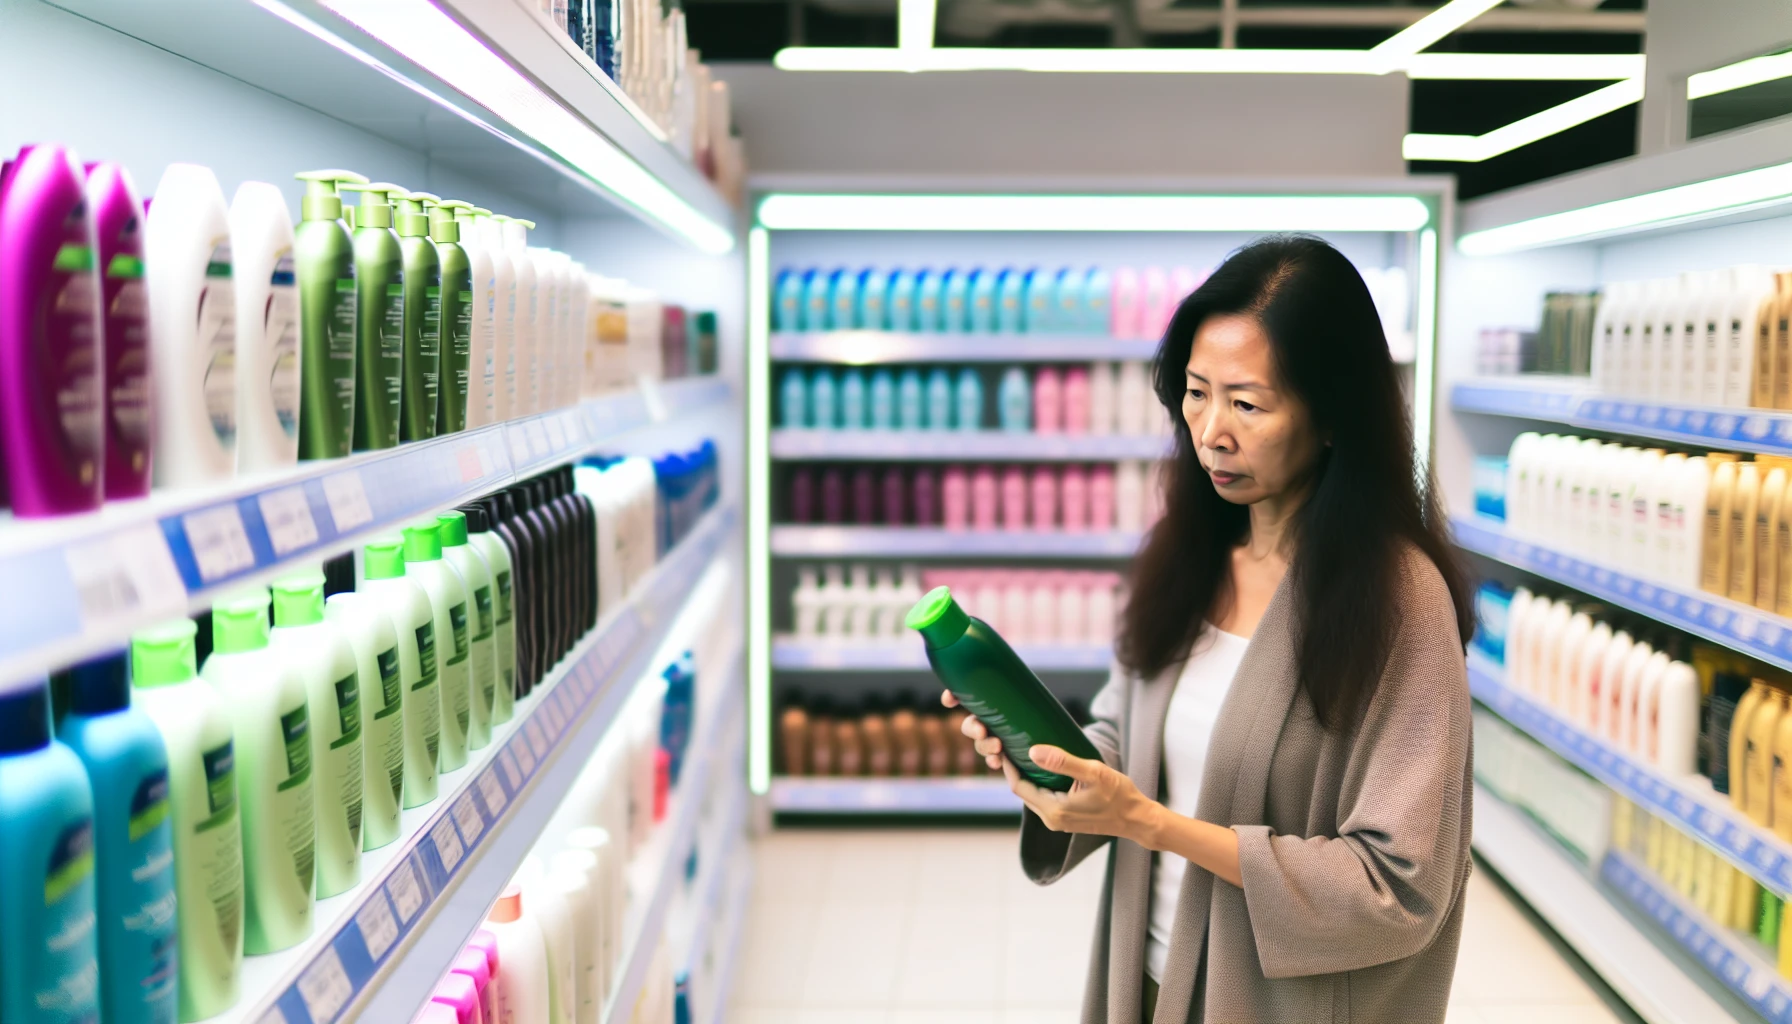 Woman choosing a shampoo bottle from a store shelf